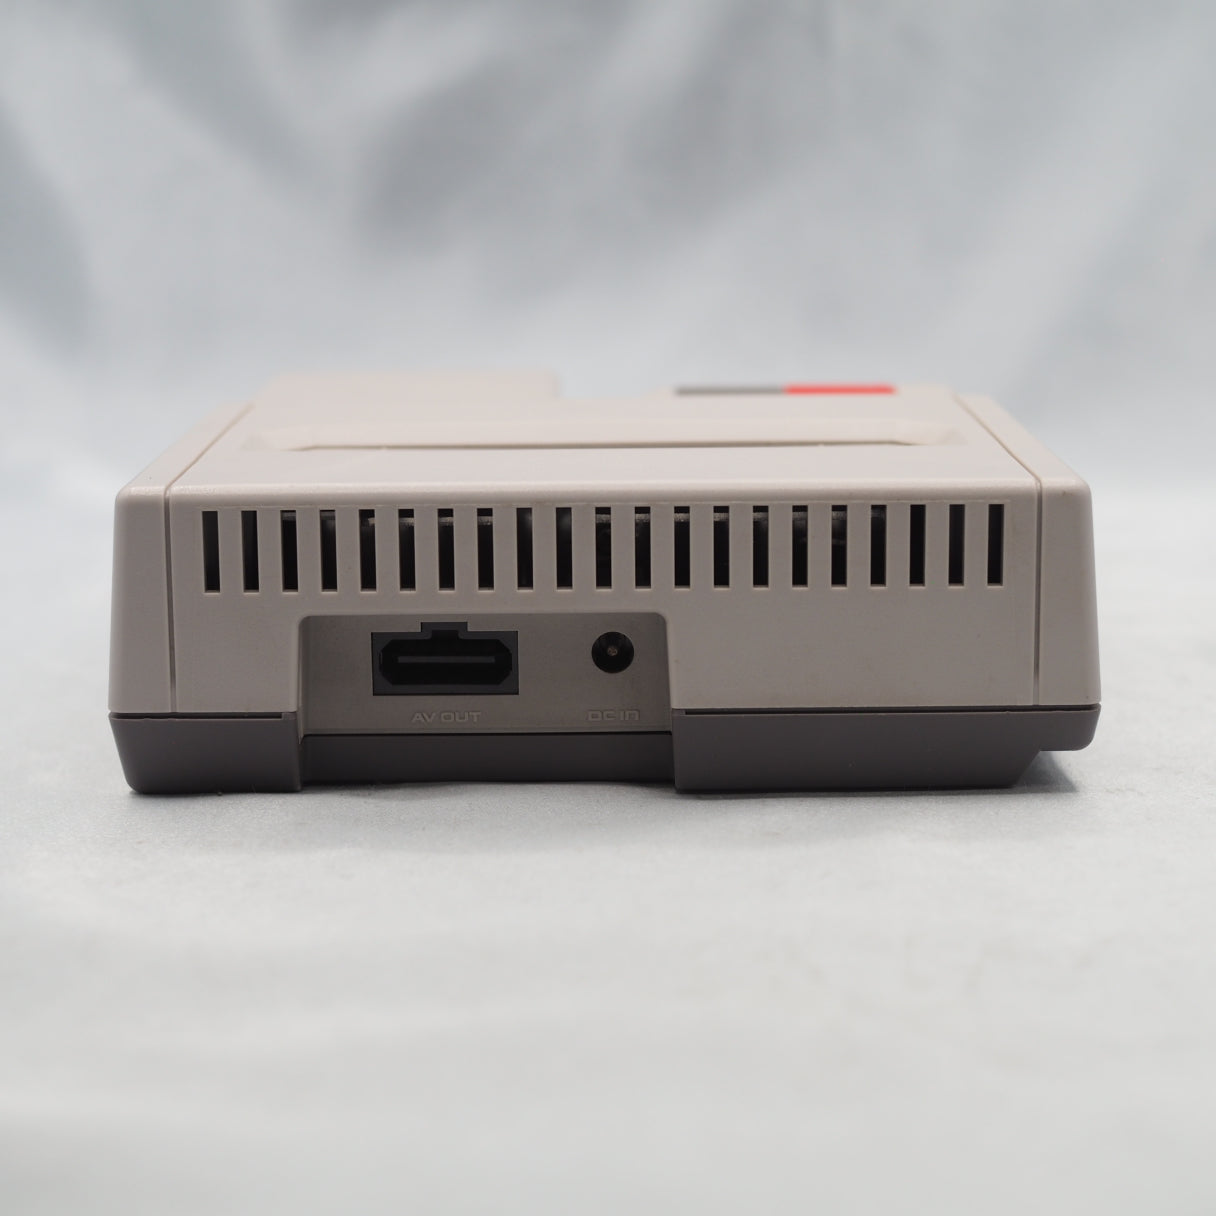 Nintendo New Famicom Console System HVC-101 Boxed